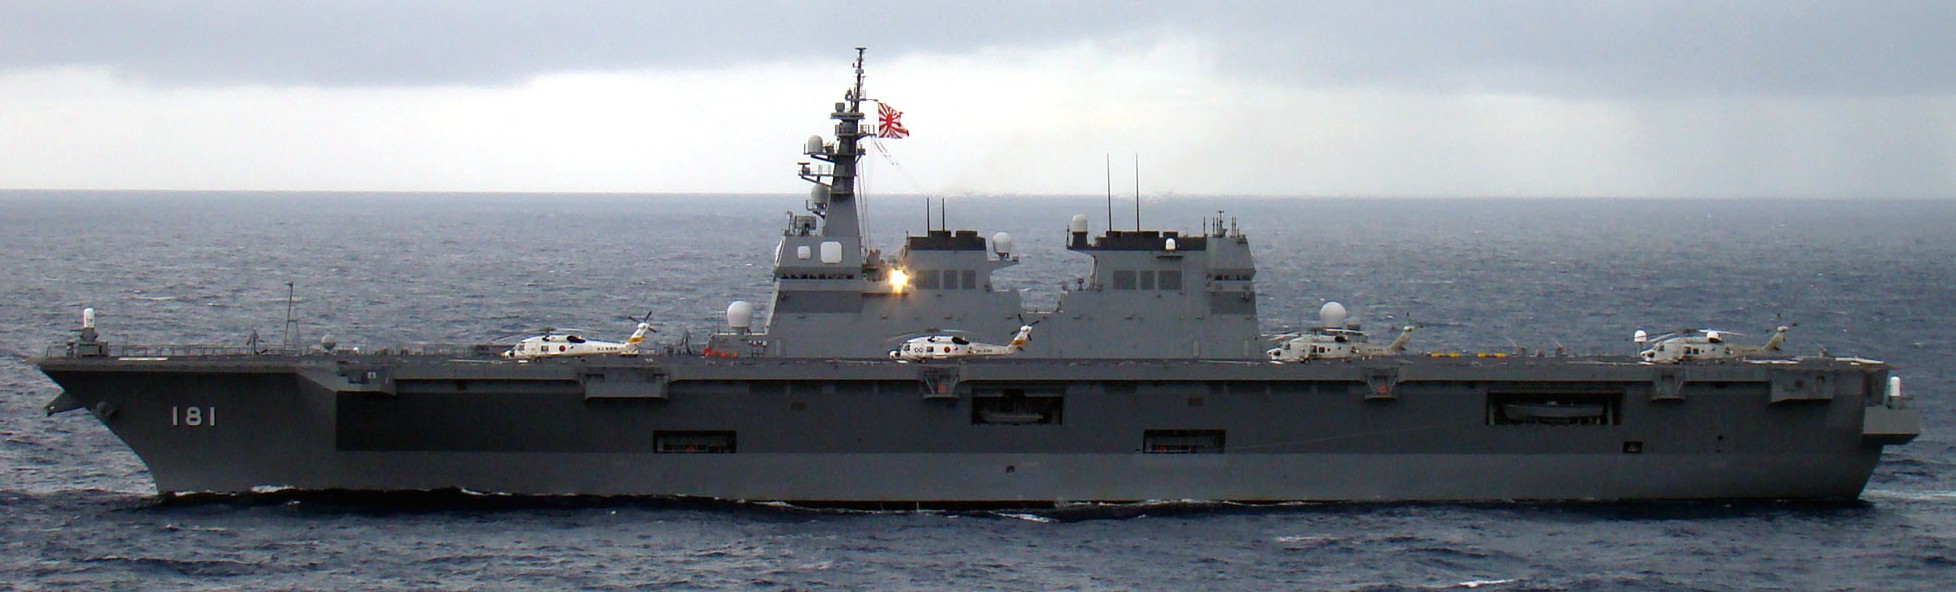 ddh-181 js hyuga helicopter destroyer japan maritime self defense force jmsdf 54